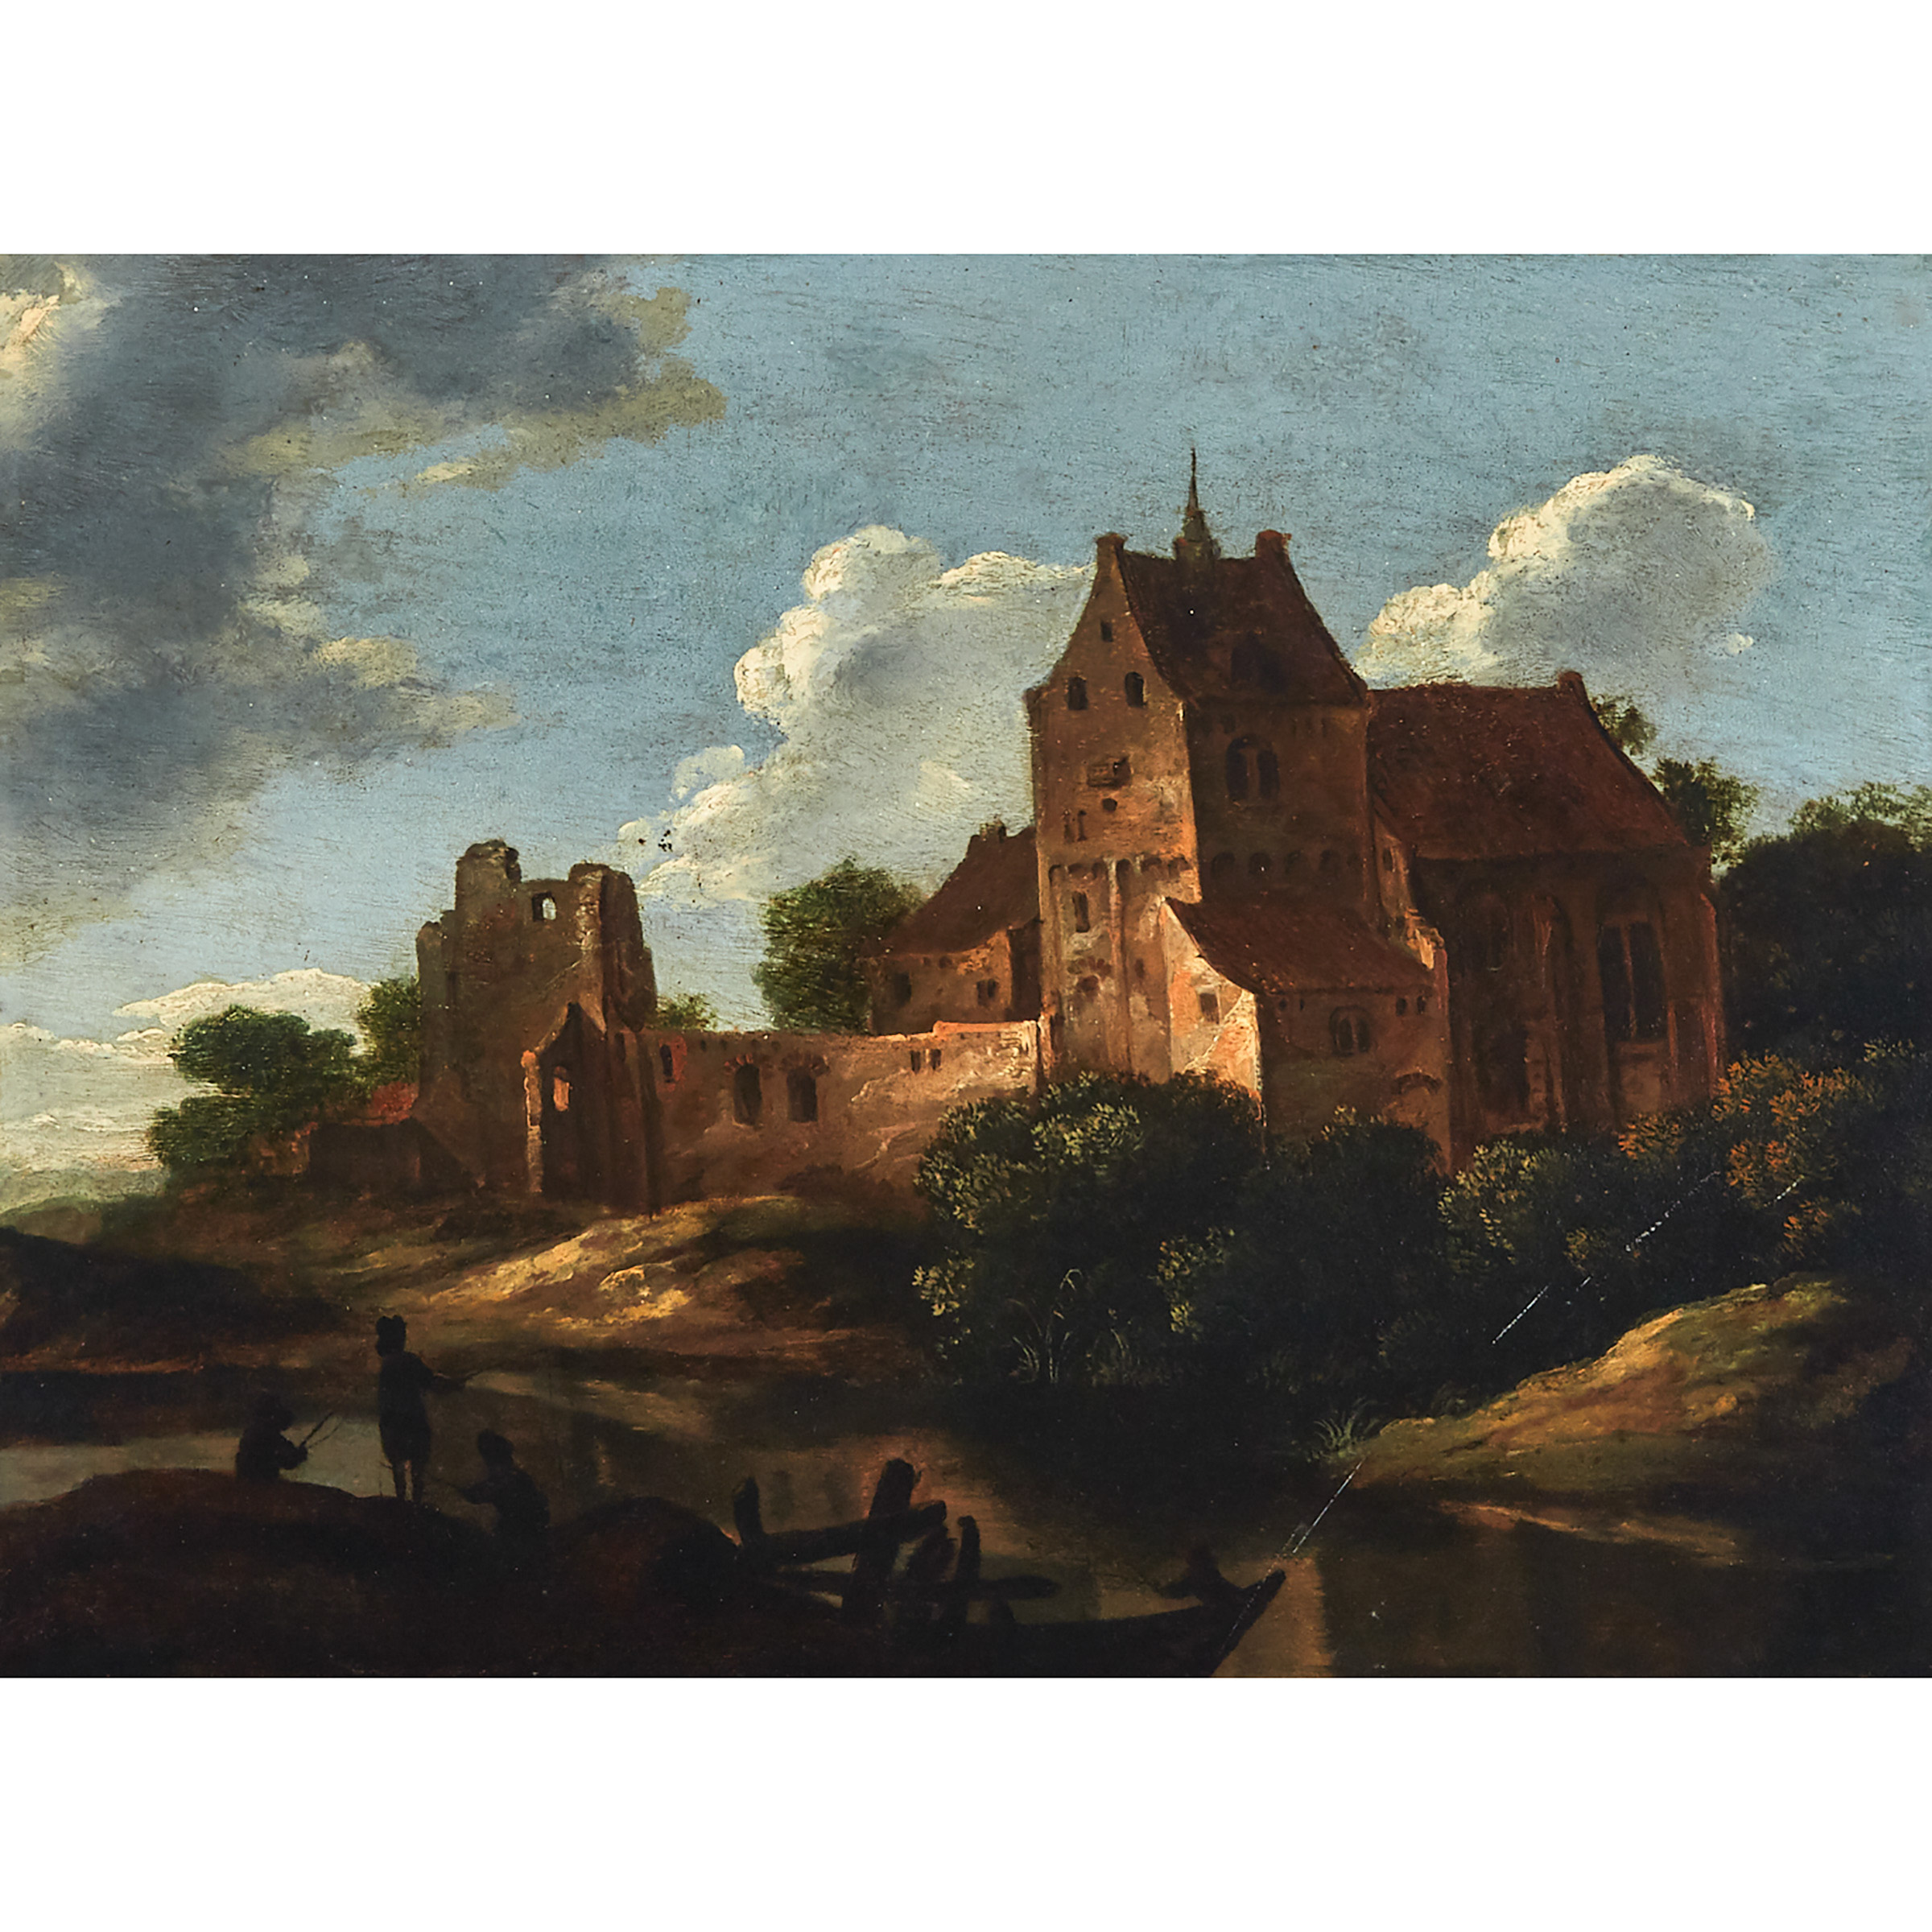 Attributed to Cornelis Gerritsz Decker (1625-1678)